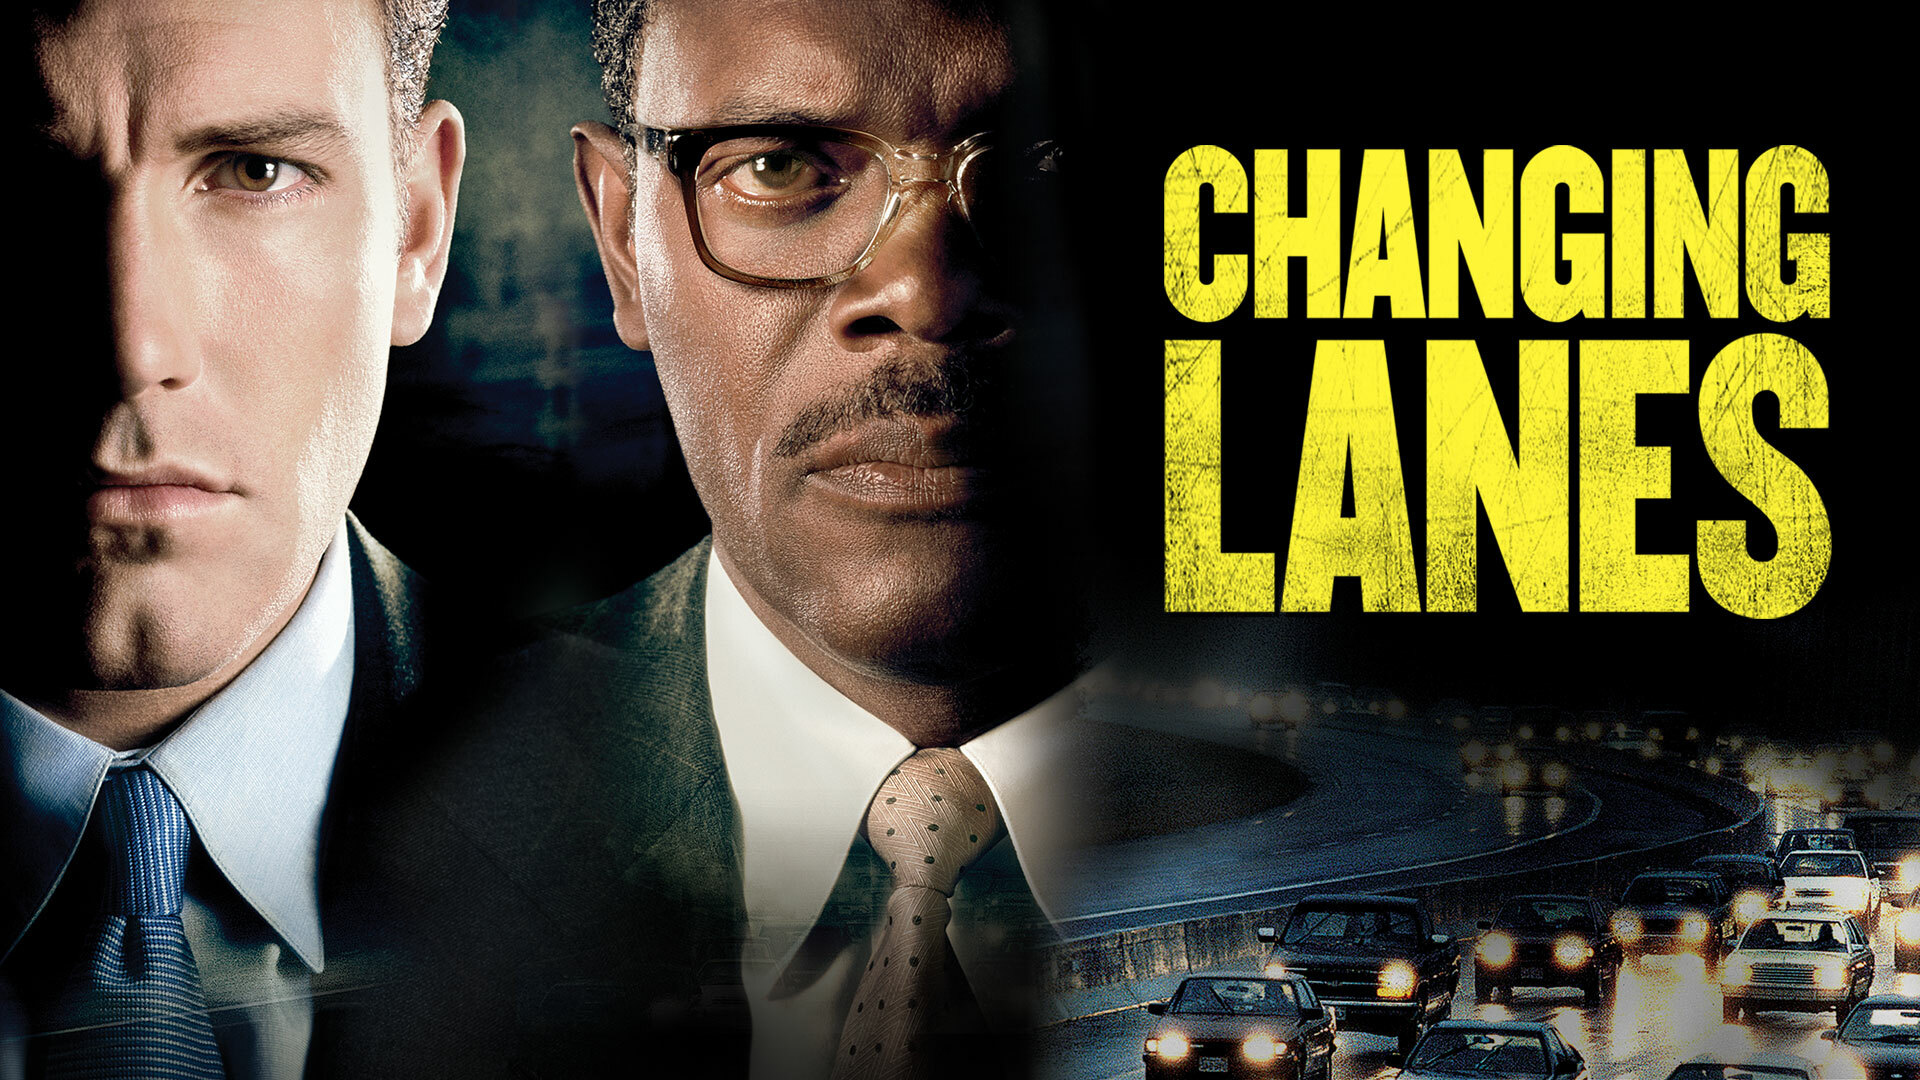 Changing Lanes - Watch Movie Trailer on Paramount Plus